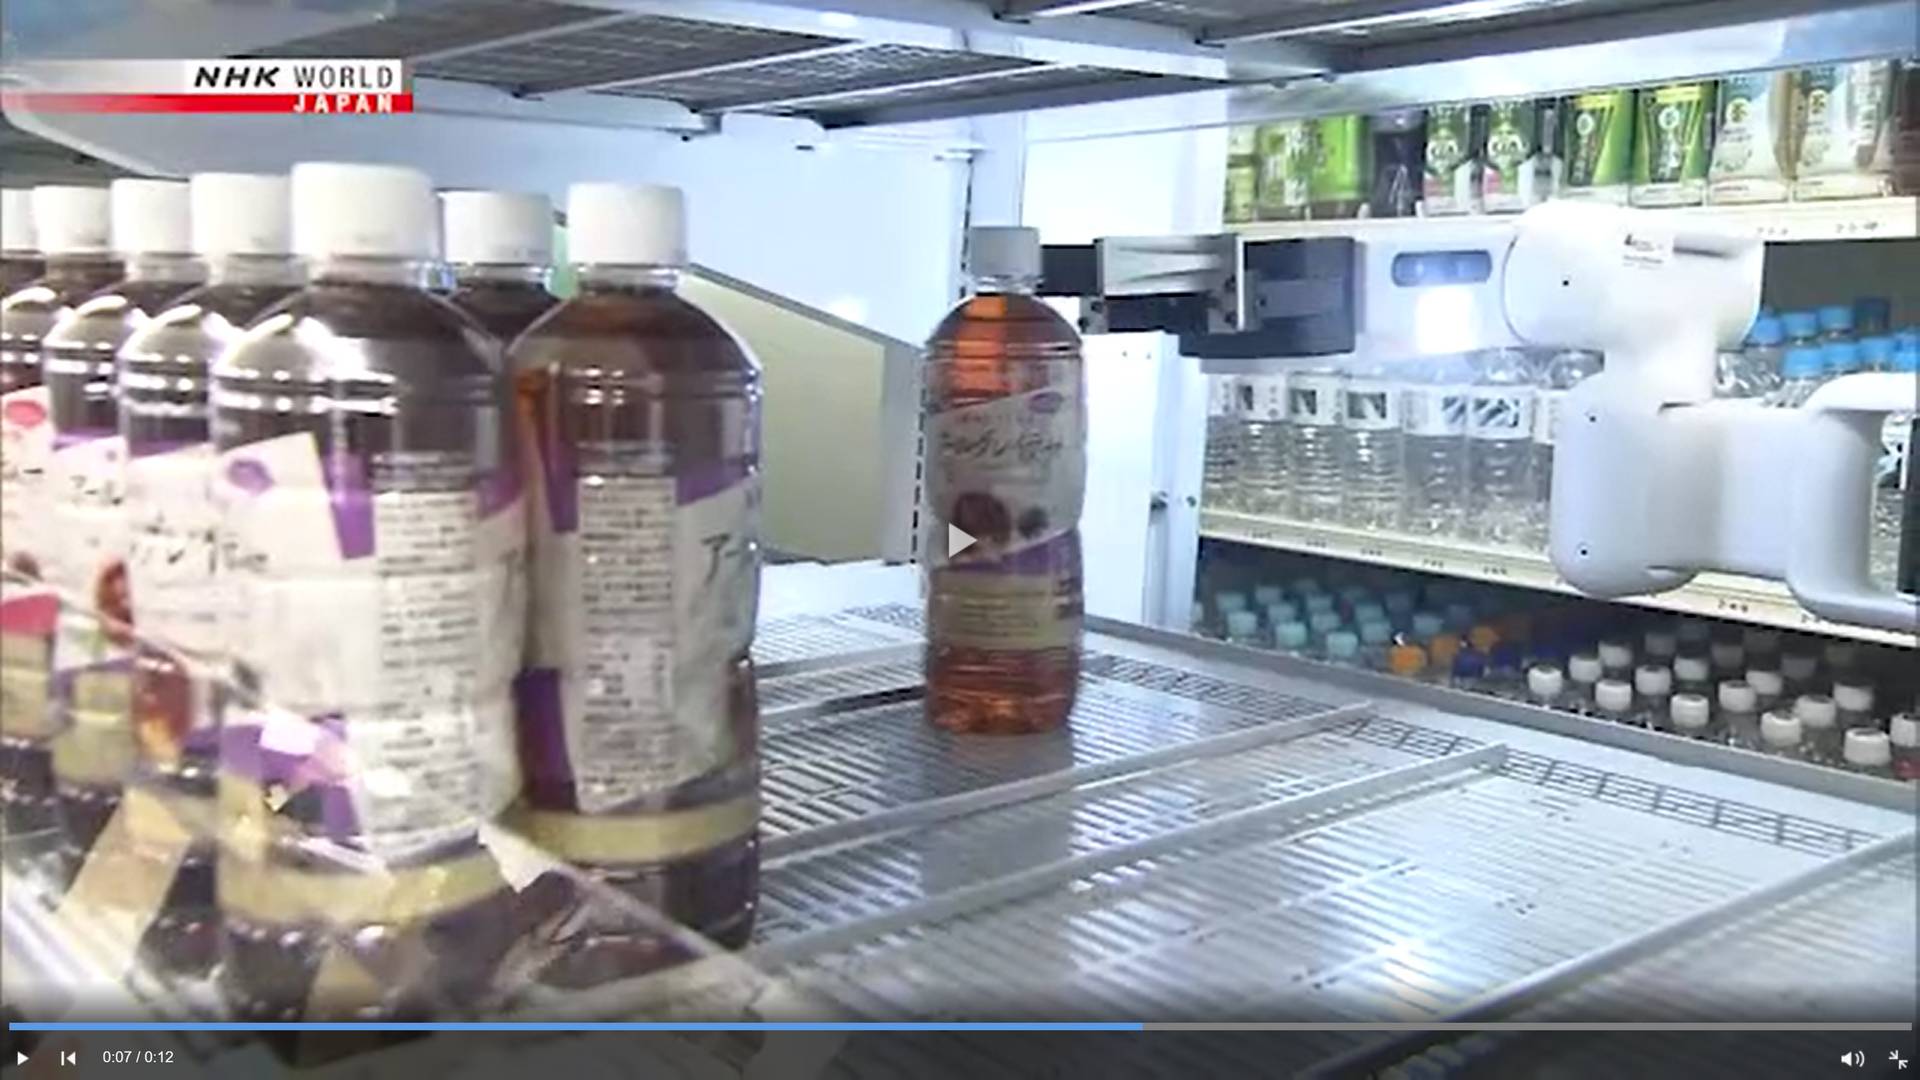 Робот опускает бутылку на полку — цитата из видео «Convenience store chain deploys first shelf-stocking robot» телеканала NHK